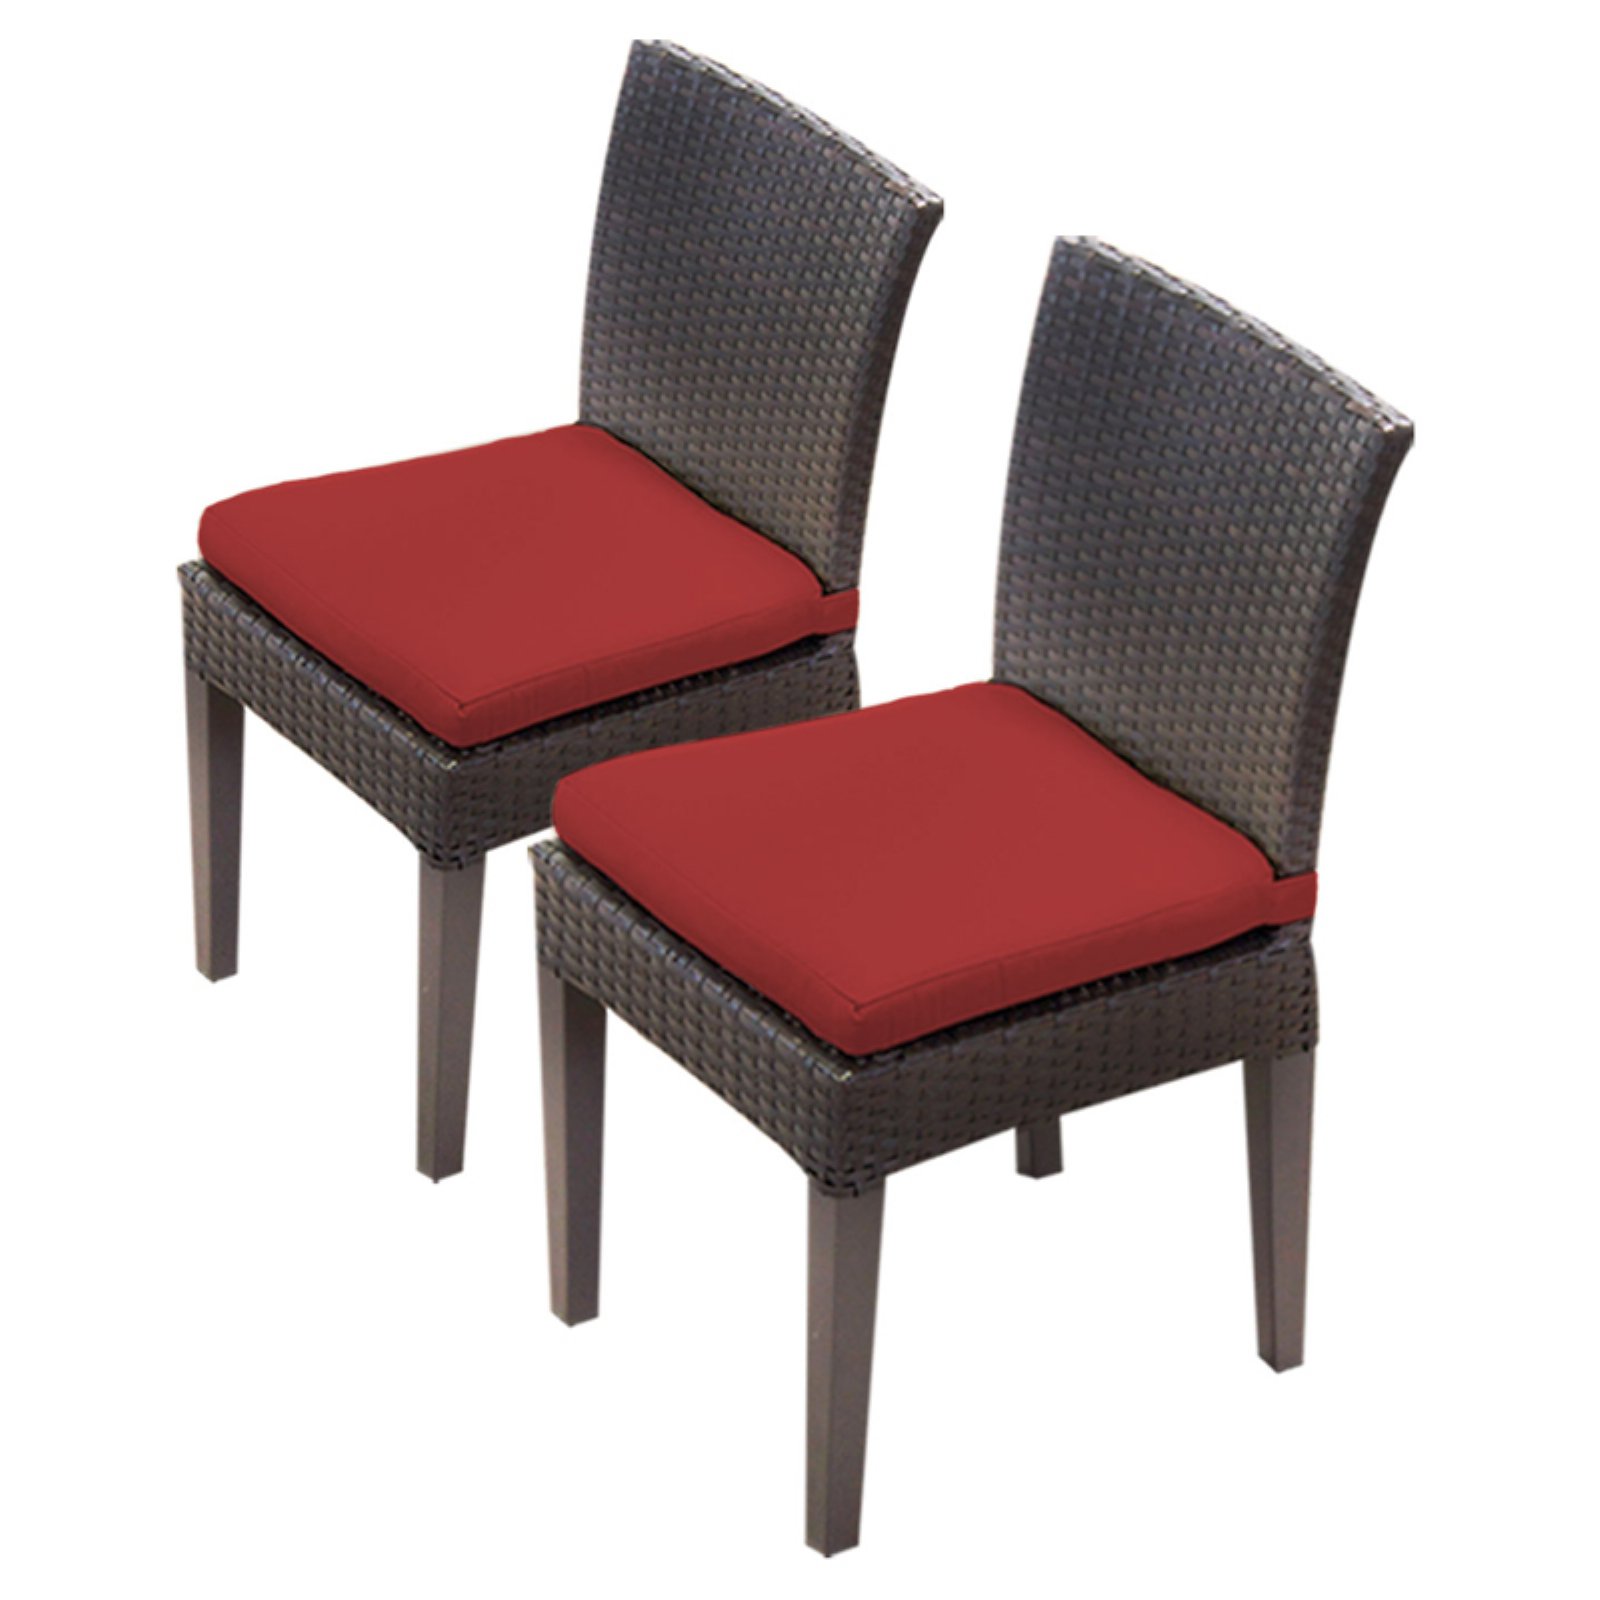 TK Classics Barbados Wicker Armless Patio Dining Chair - image 1 of 2